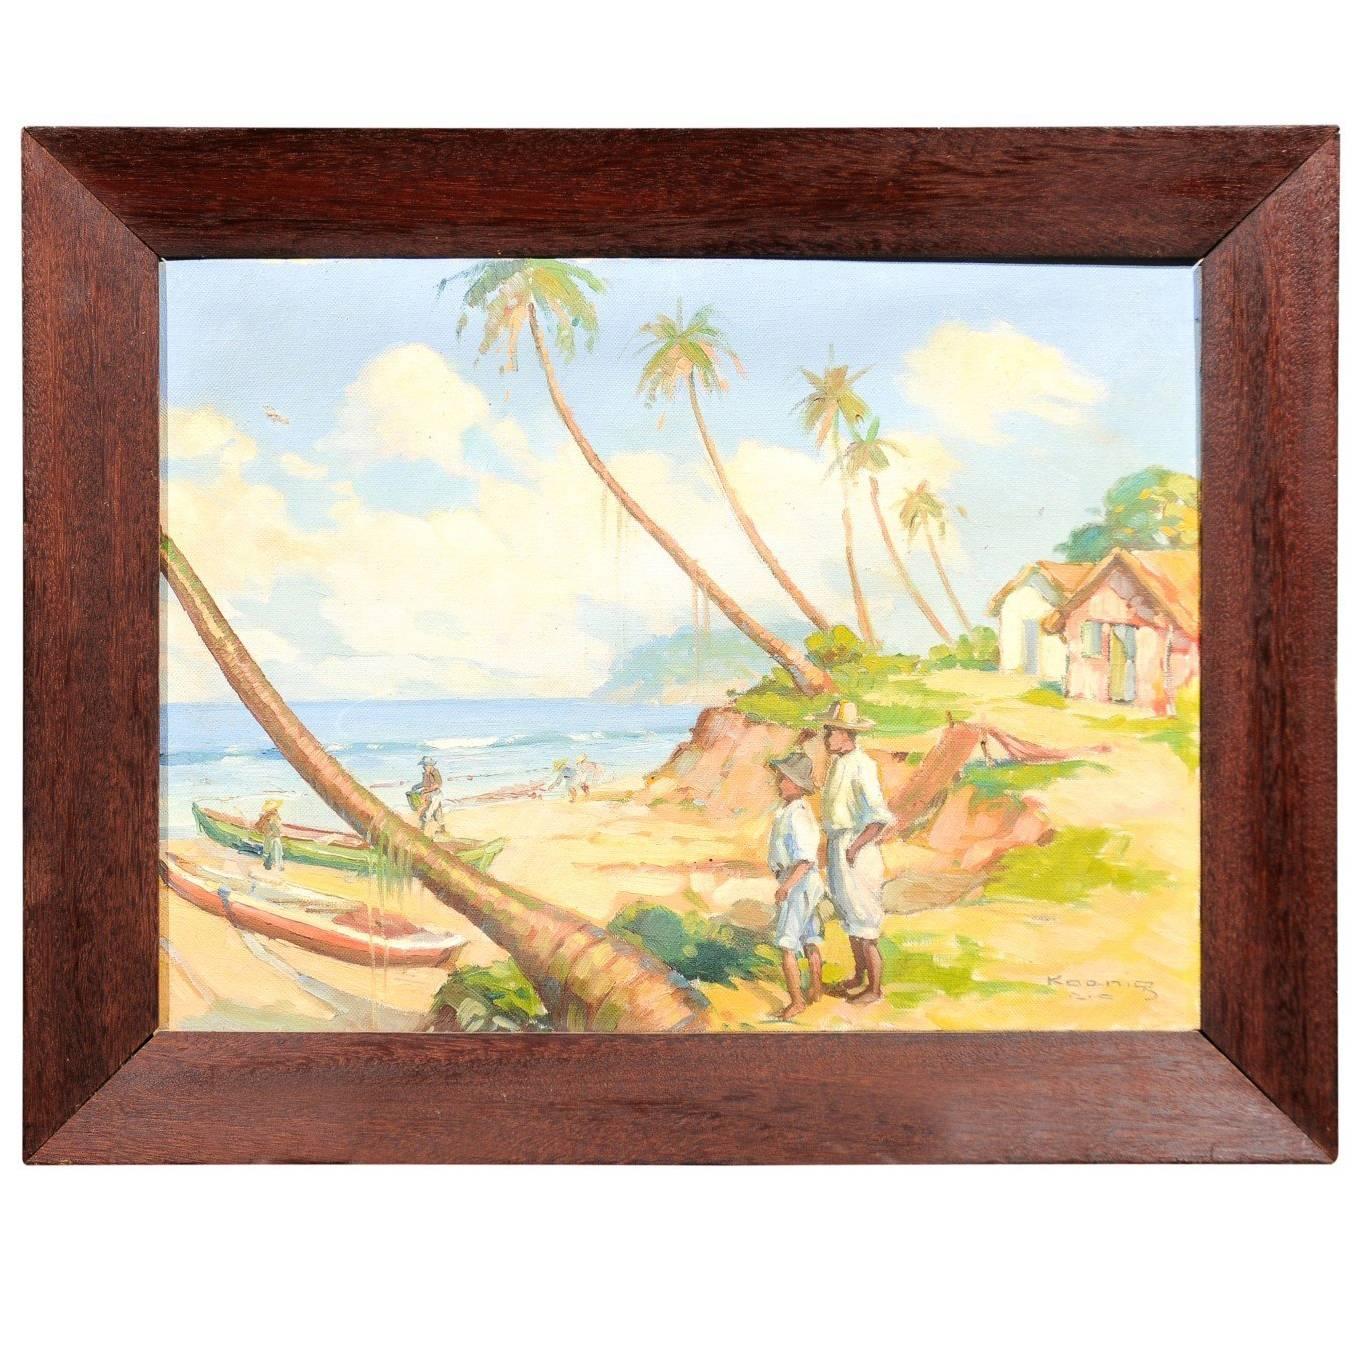 Impressionistic Island Landscape Oil Painting